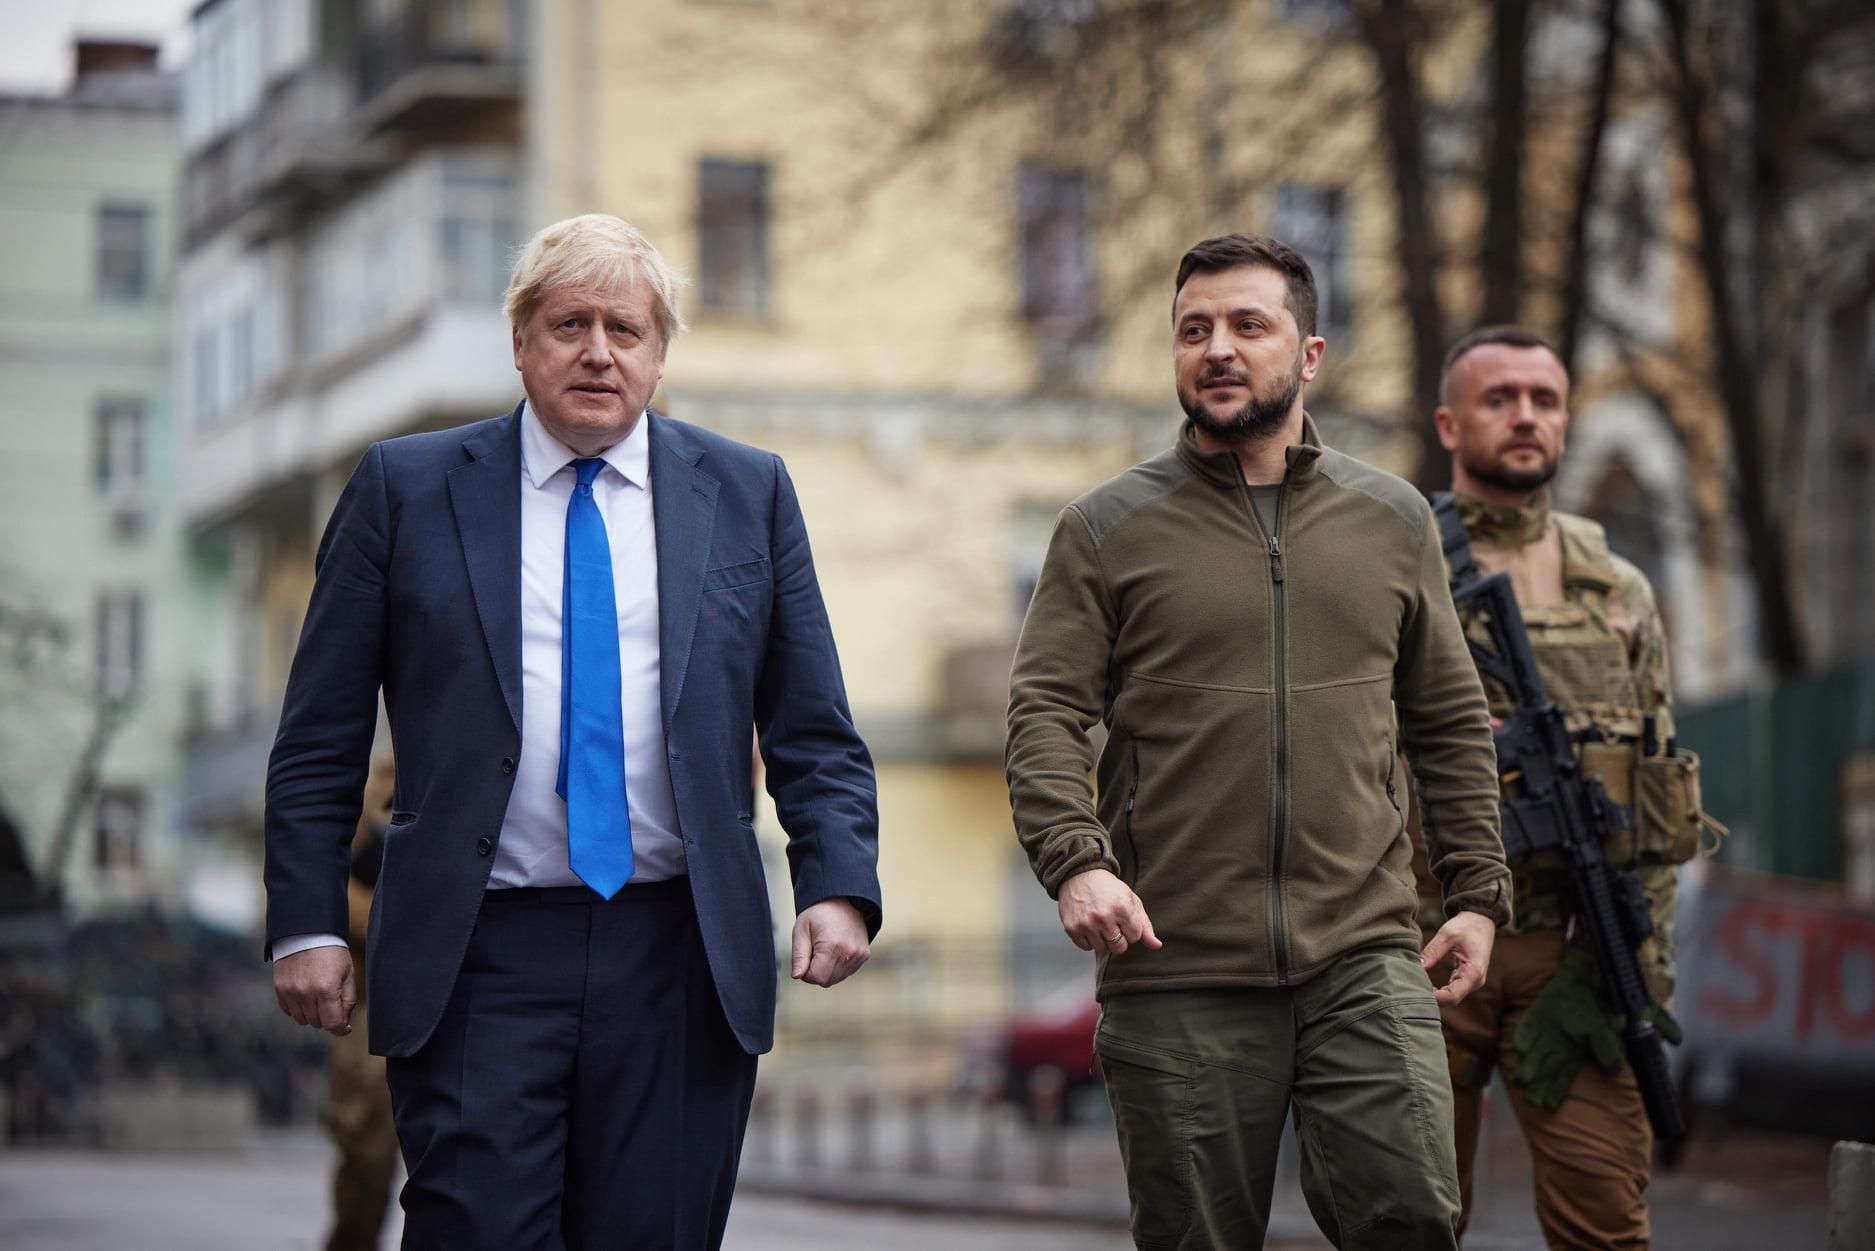 British Prime Minister Boris Johnson walks with the Ukrainian president